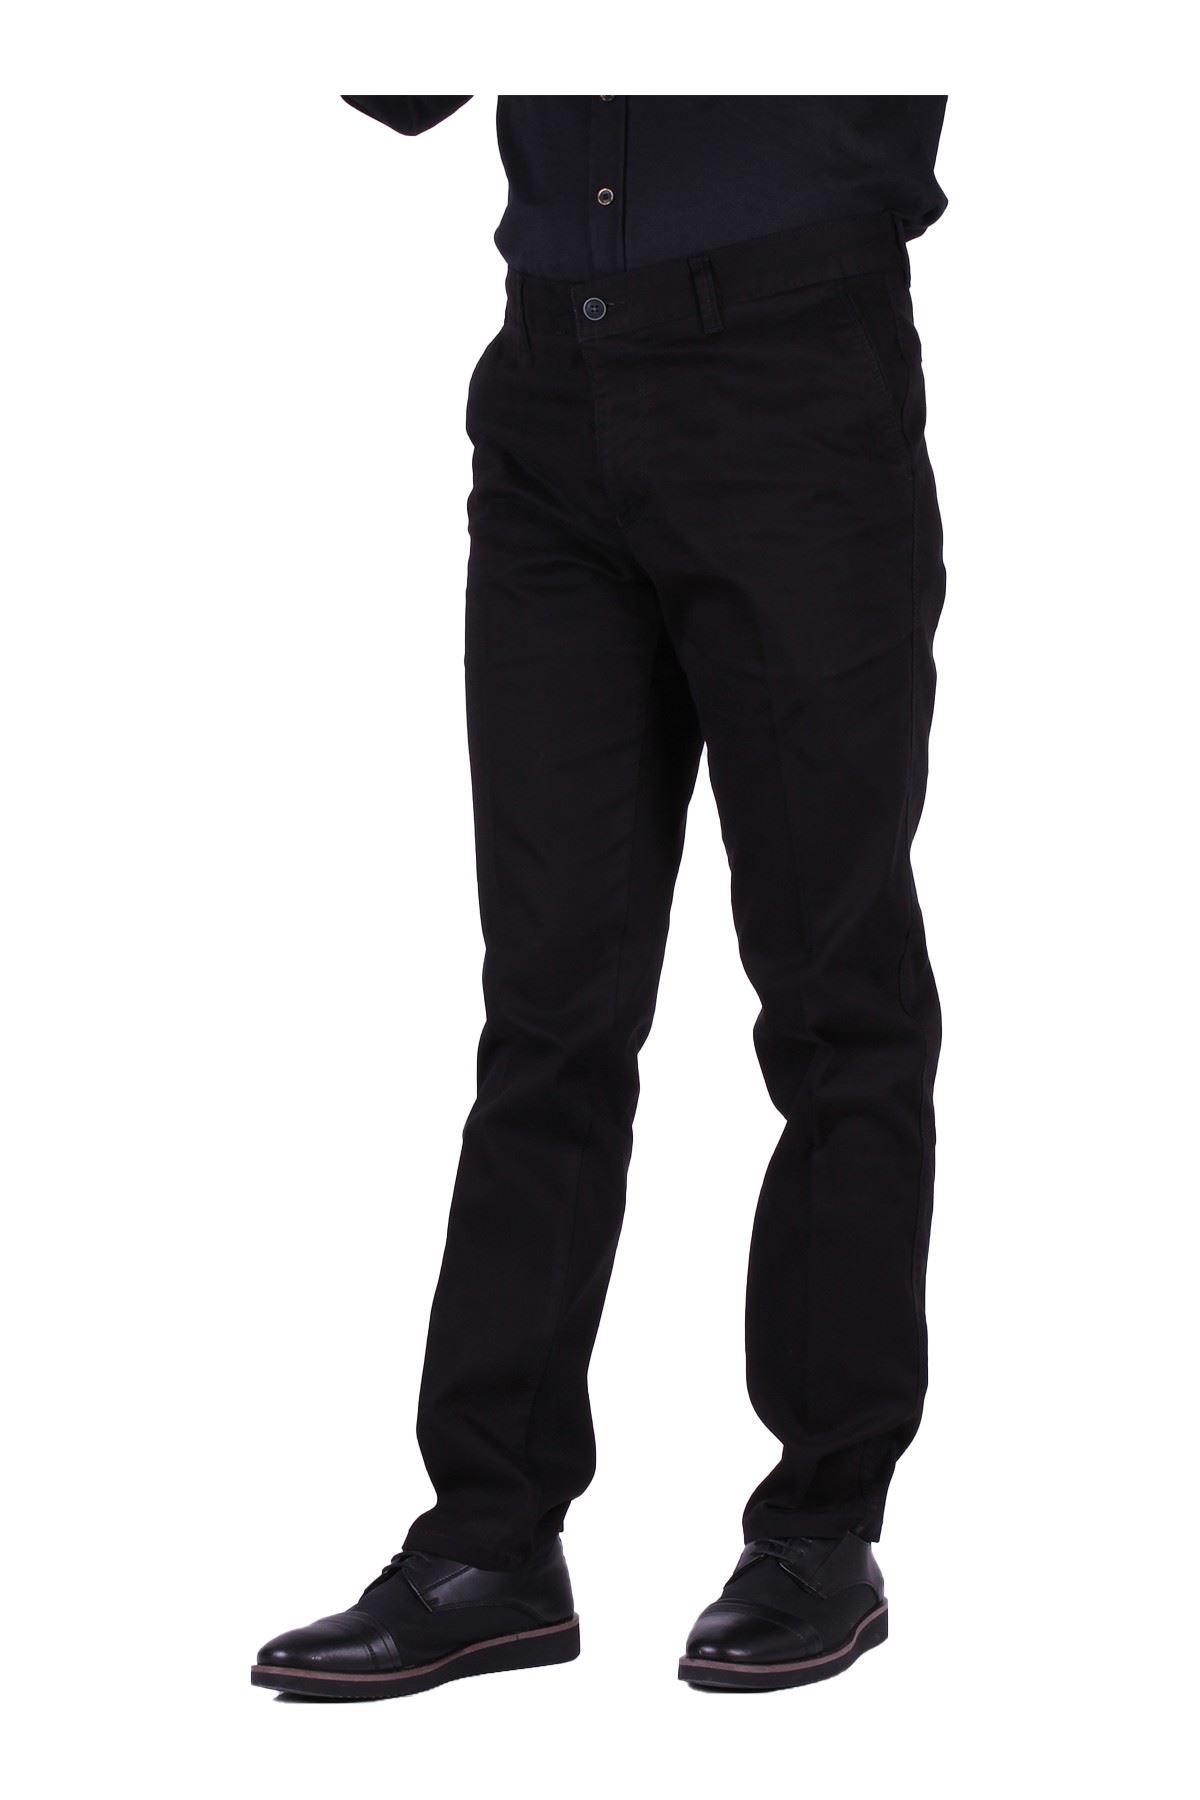 Giyinsen Erkek Siyah Kanvas Pantolon - 23KA50000009